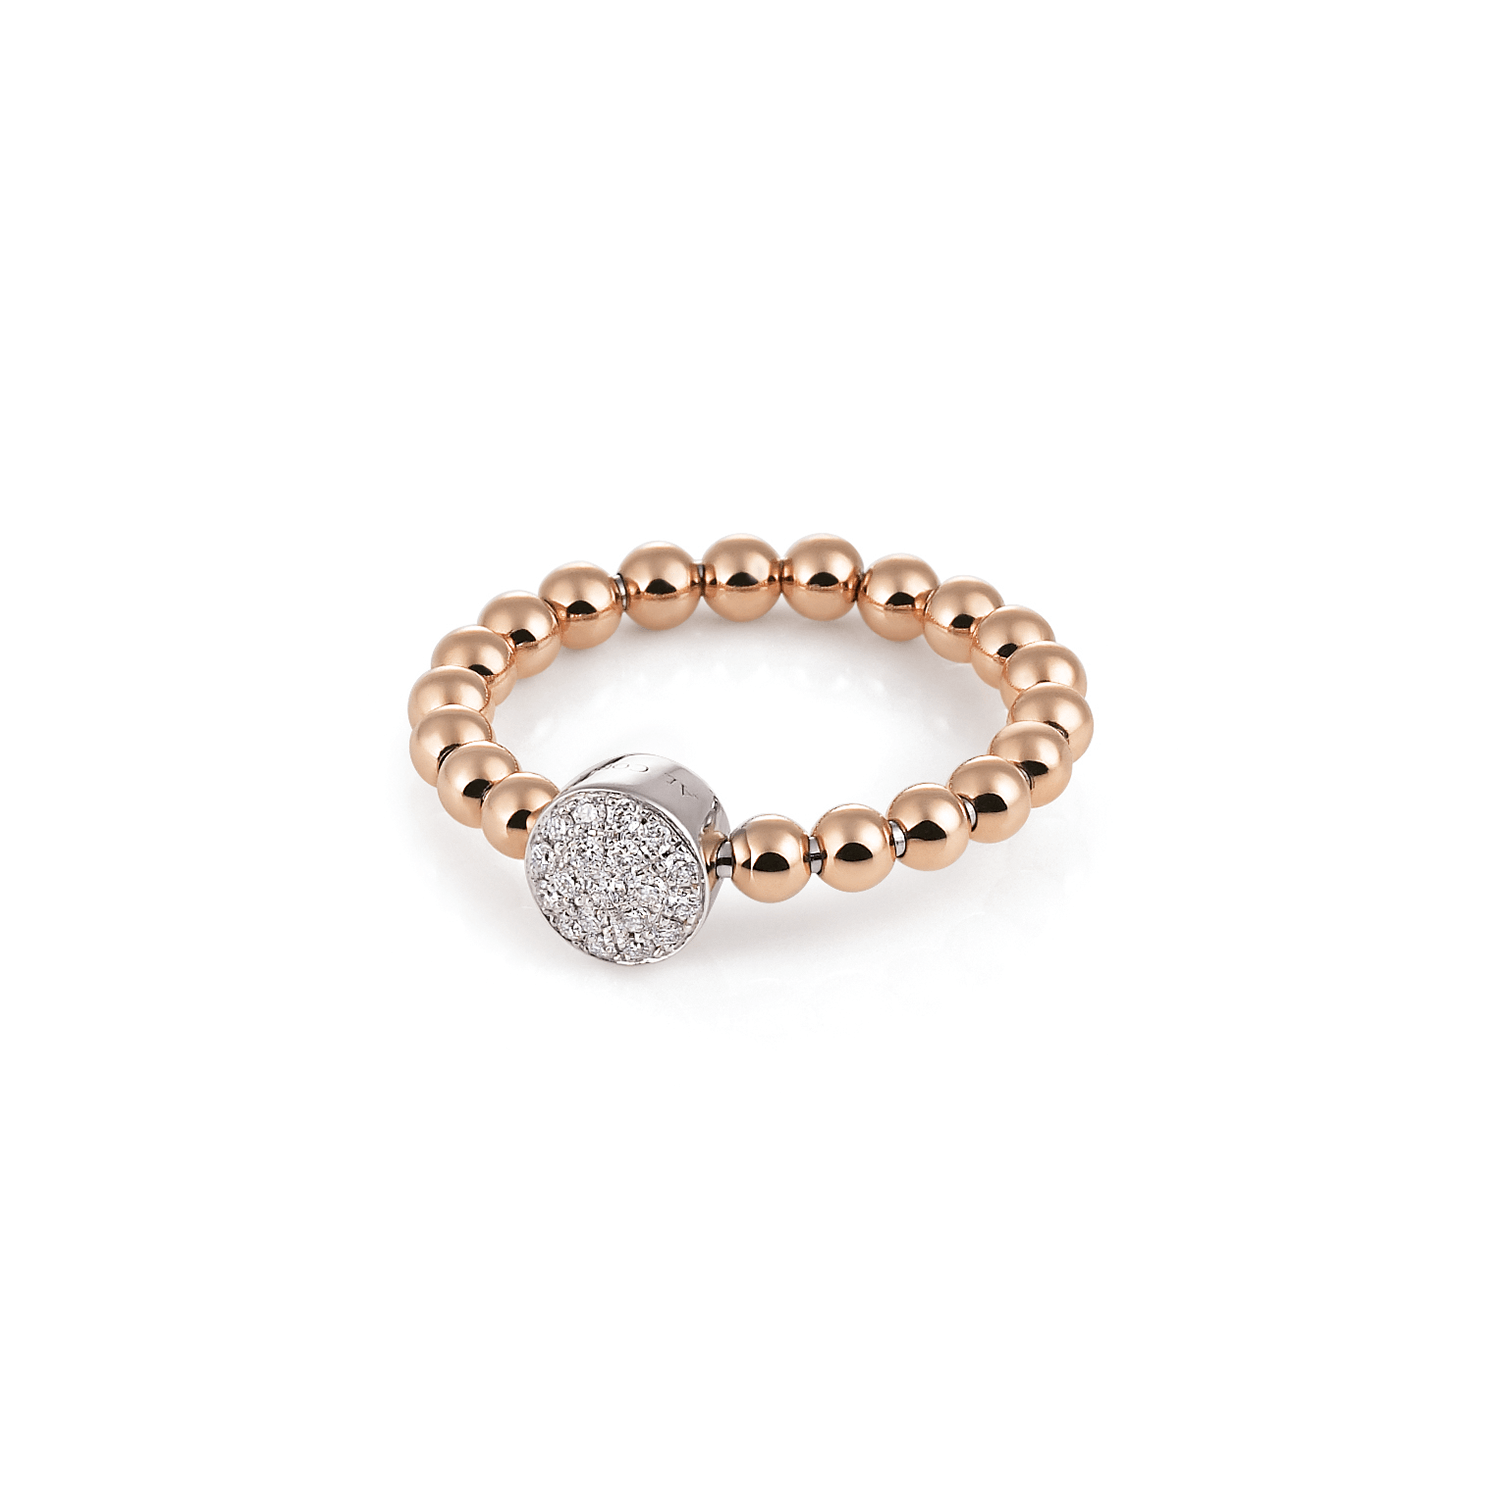 Al Coro Palladio Ring in 18k Rose and White Gold with Diamonds - Orsini Jewellers NZ